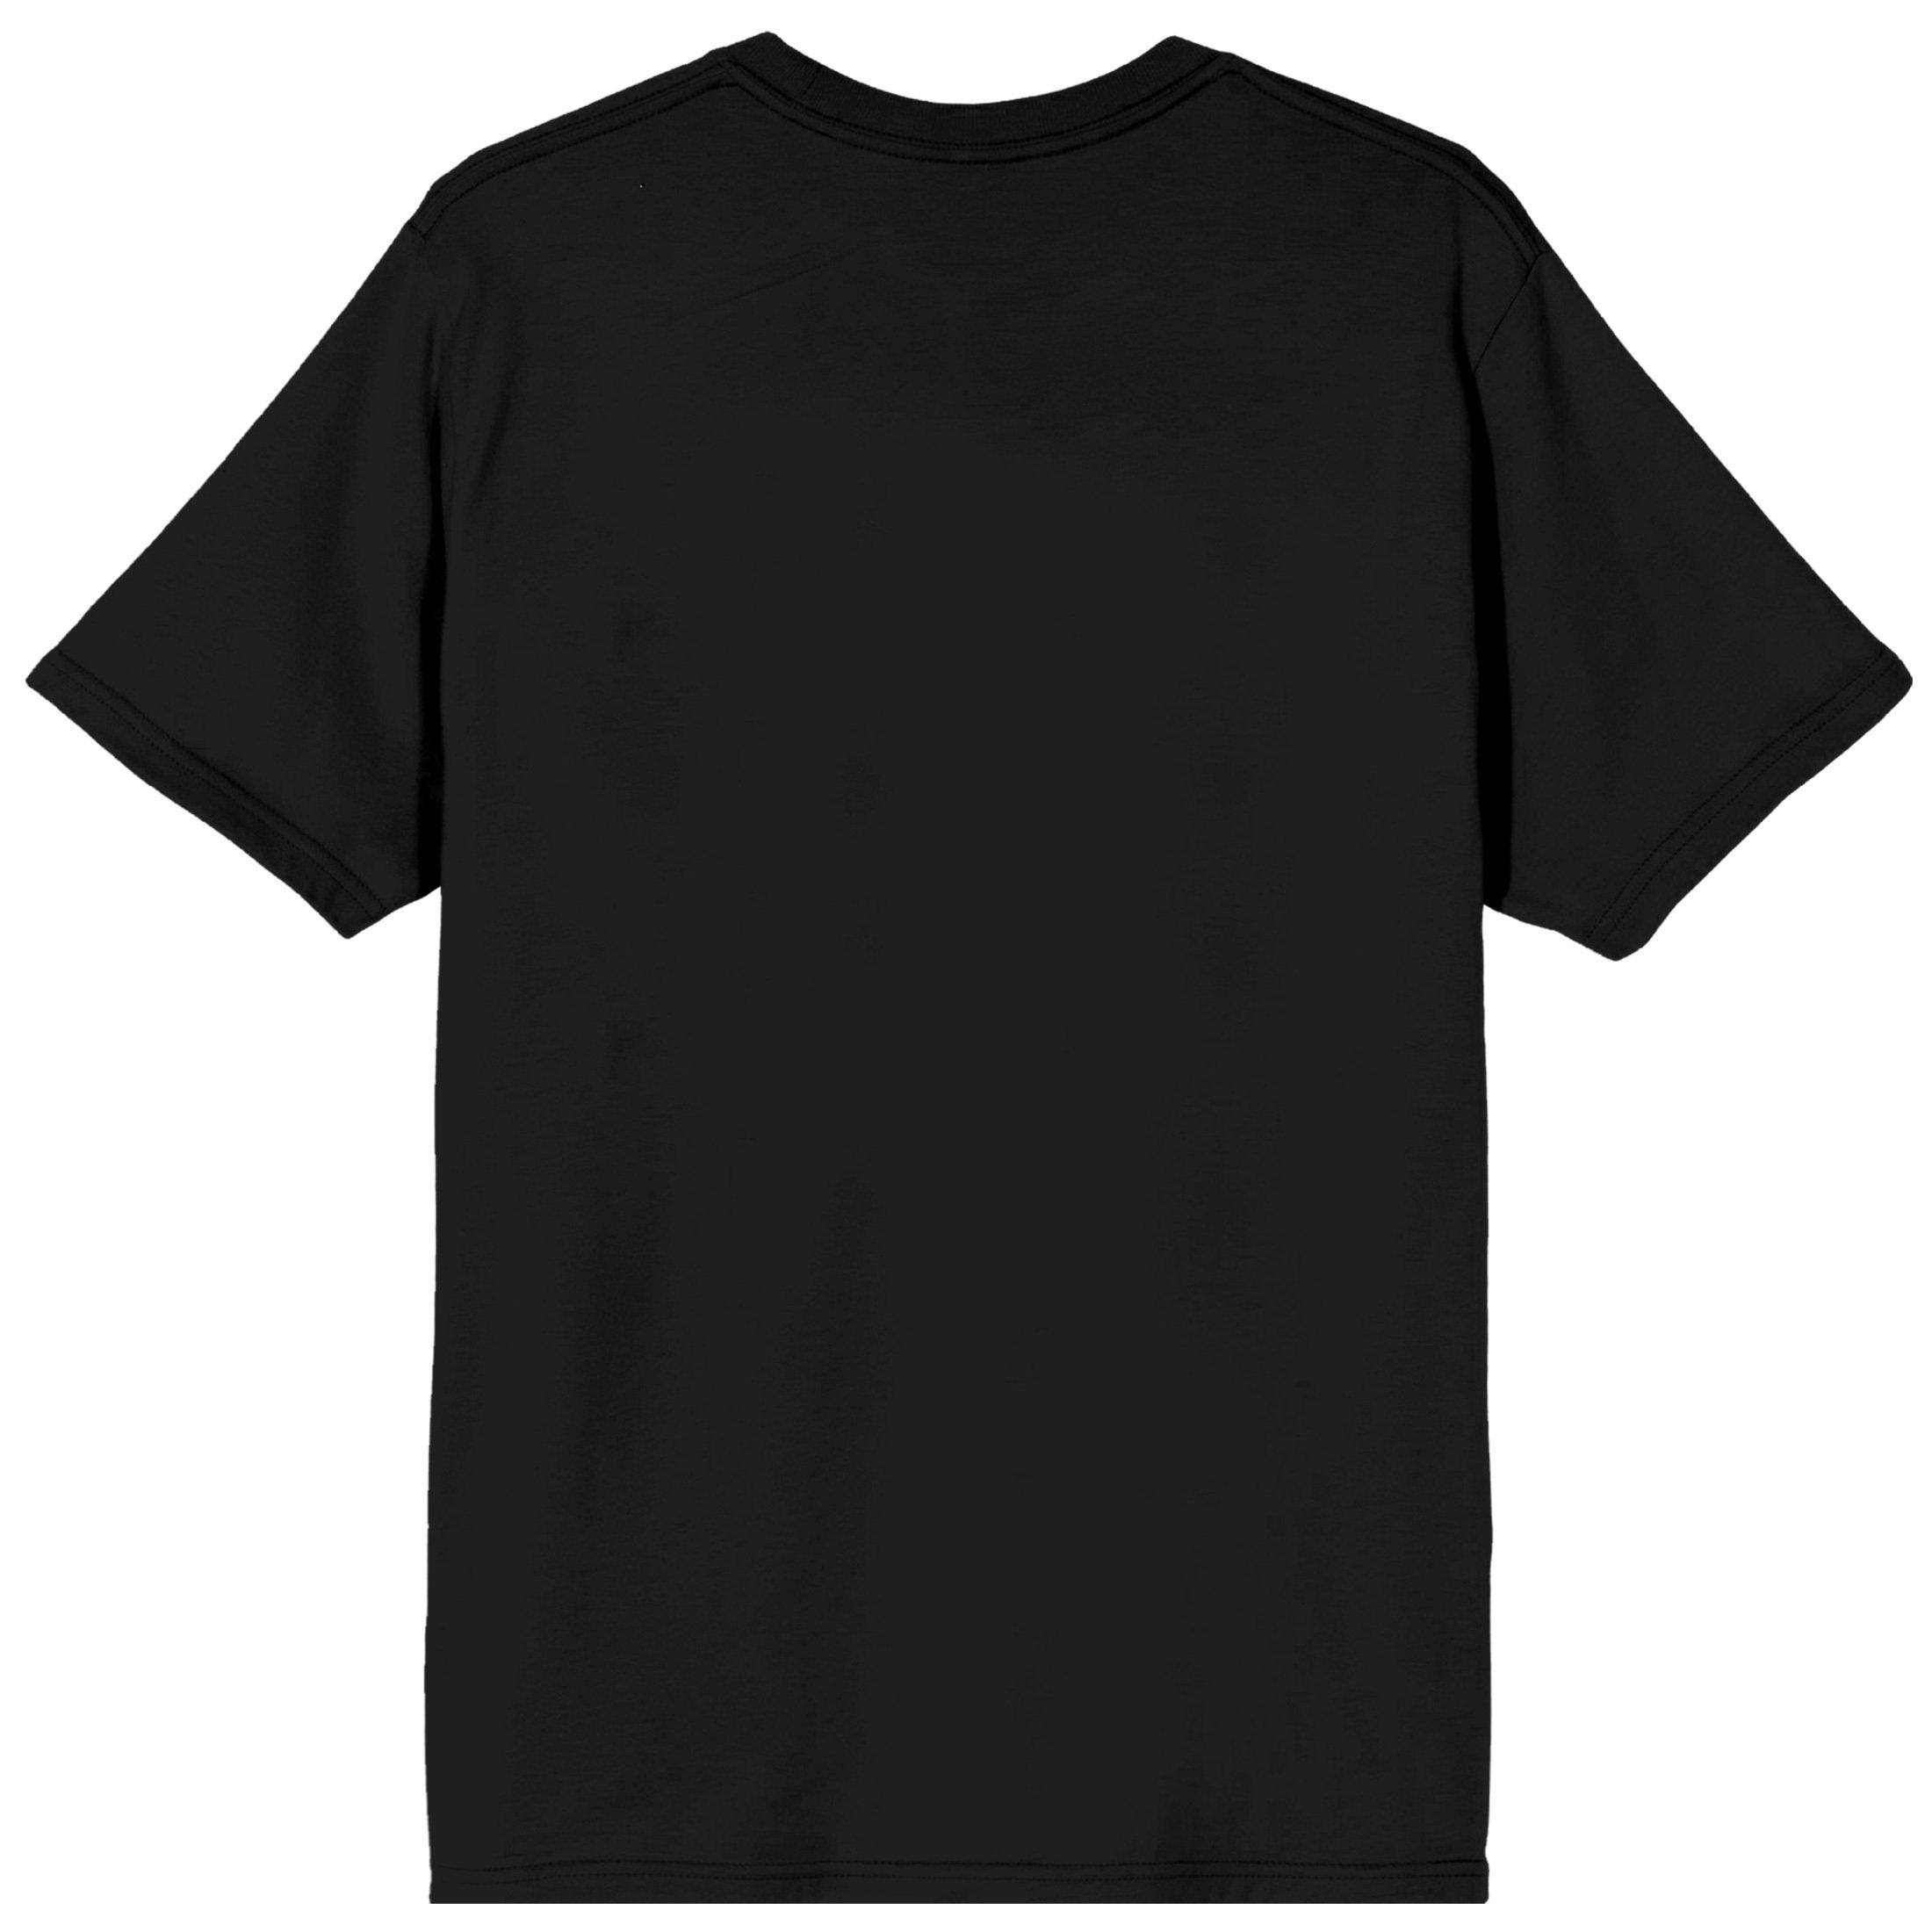 Dragon Ball Super Group Art Men's Black Short Sleeve T-Shirt